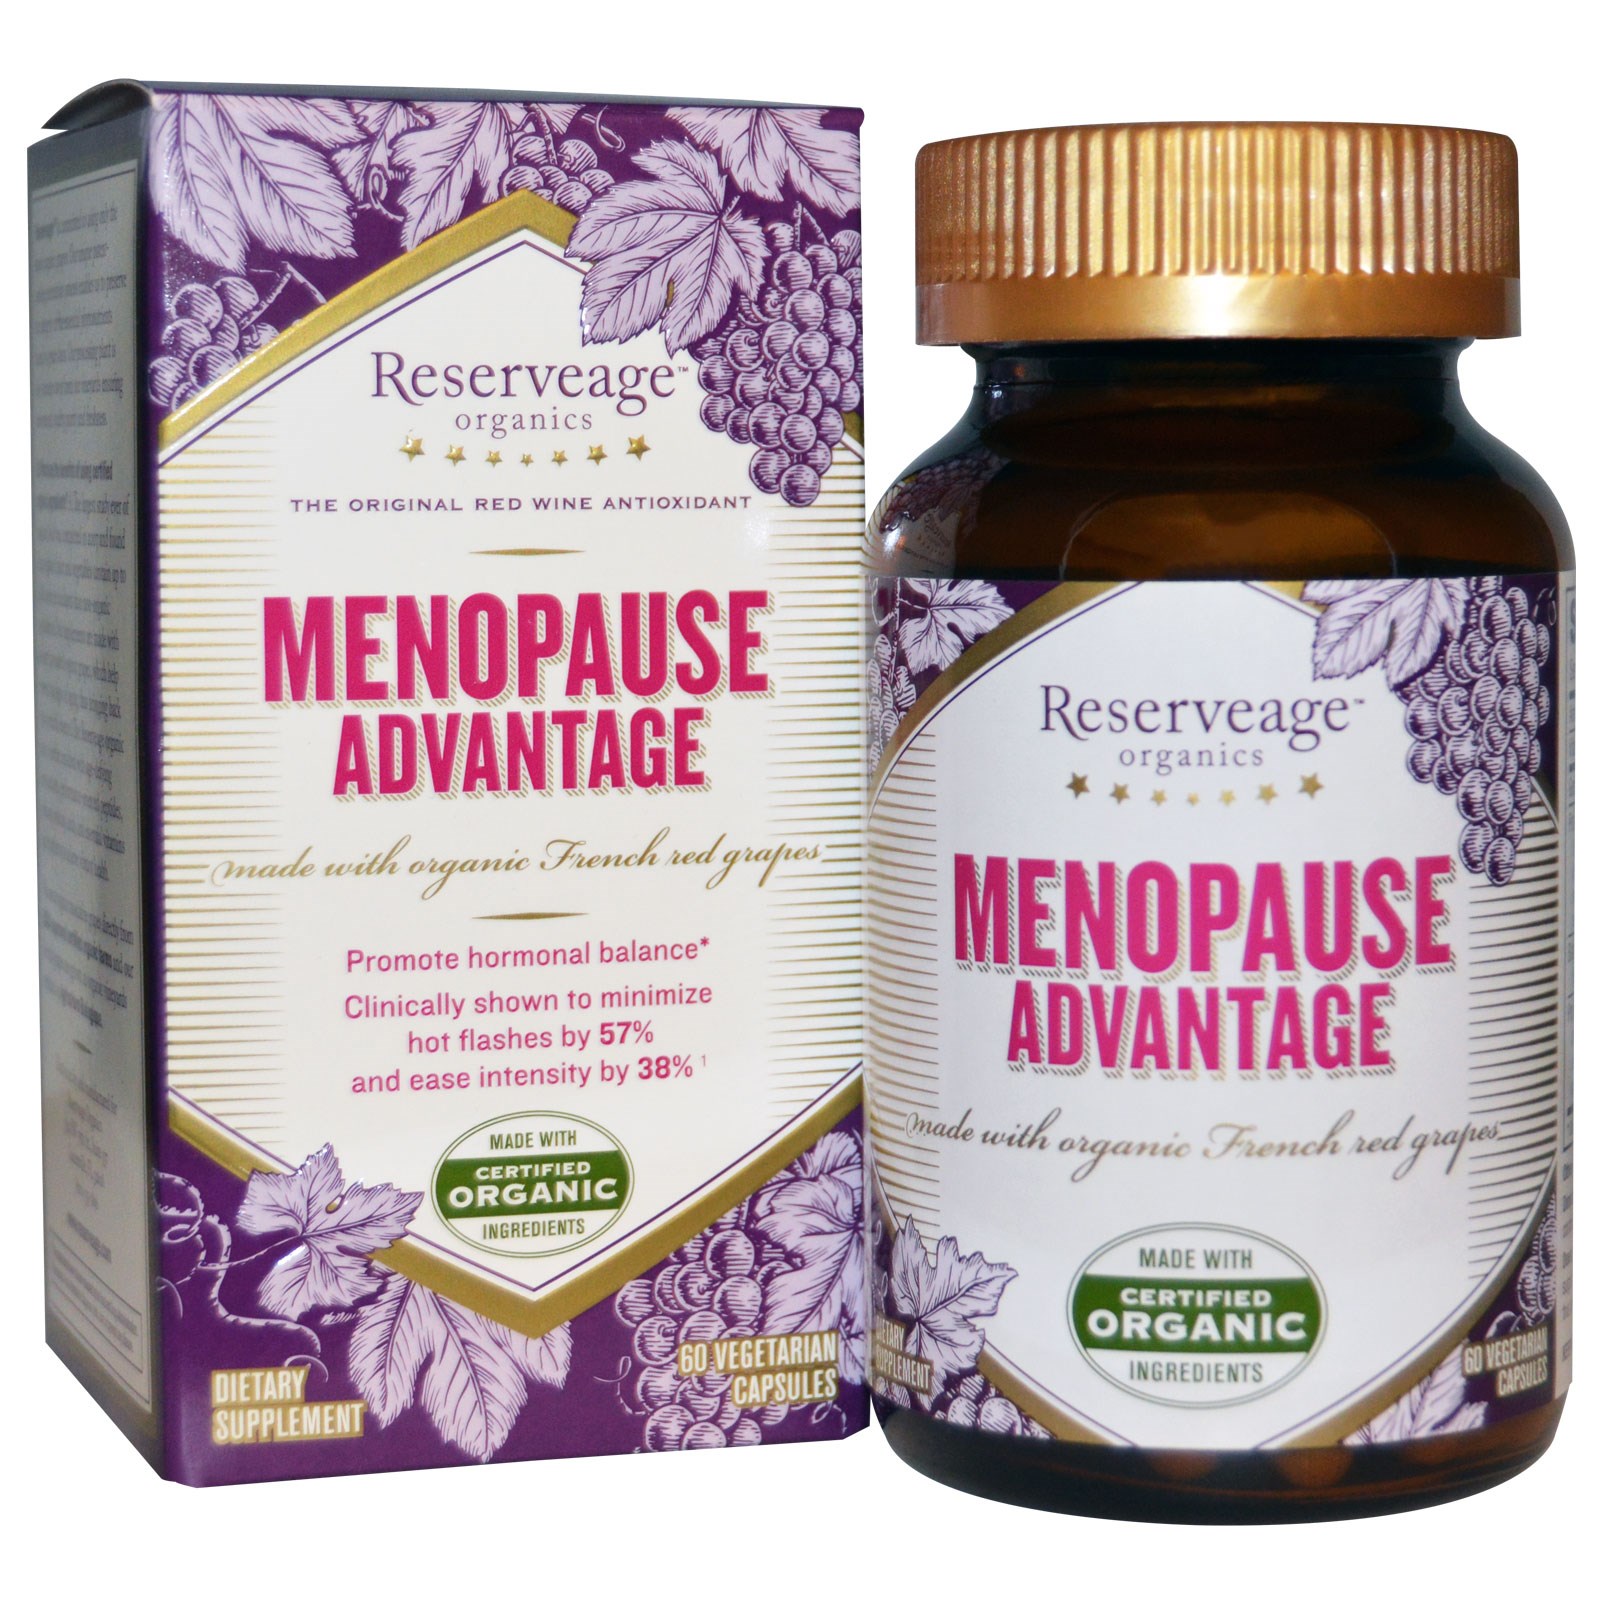 Витамины менопауза купить. Менопауза витамины. Менопауза БАД. Солгар менопауза. Витамины для женщин в менопаузе.